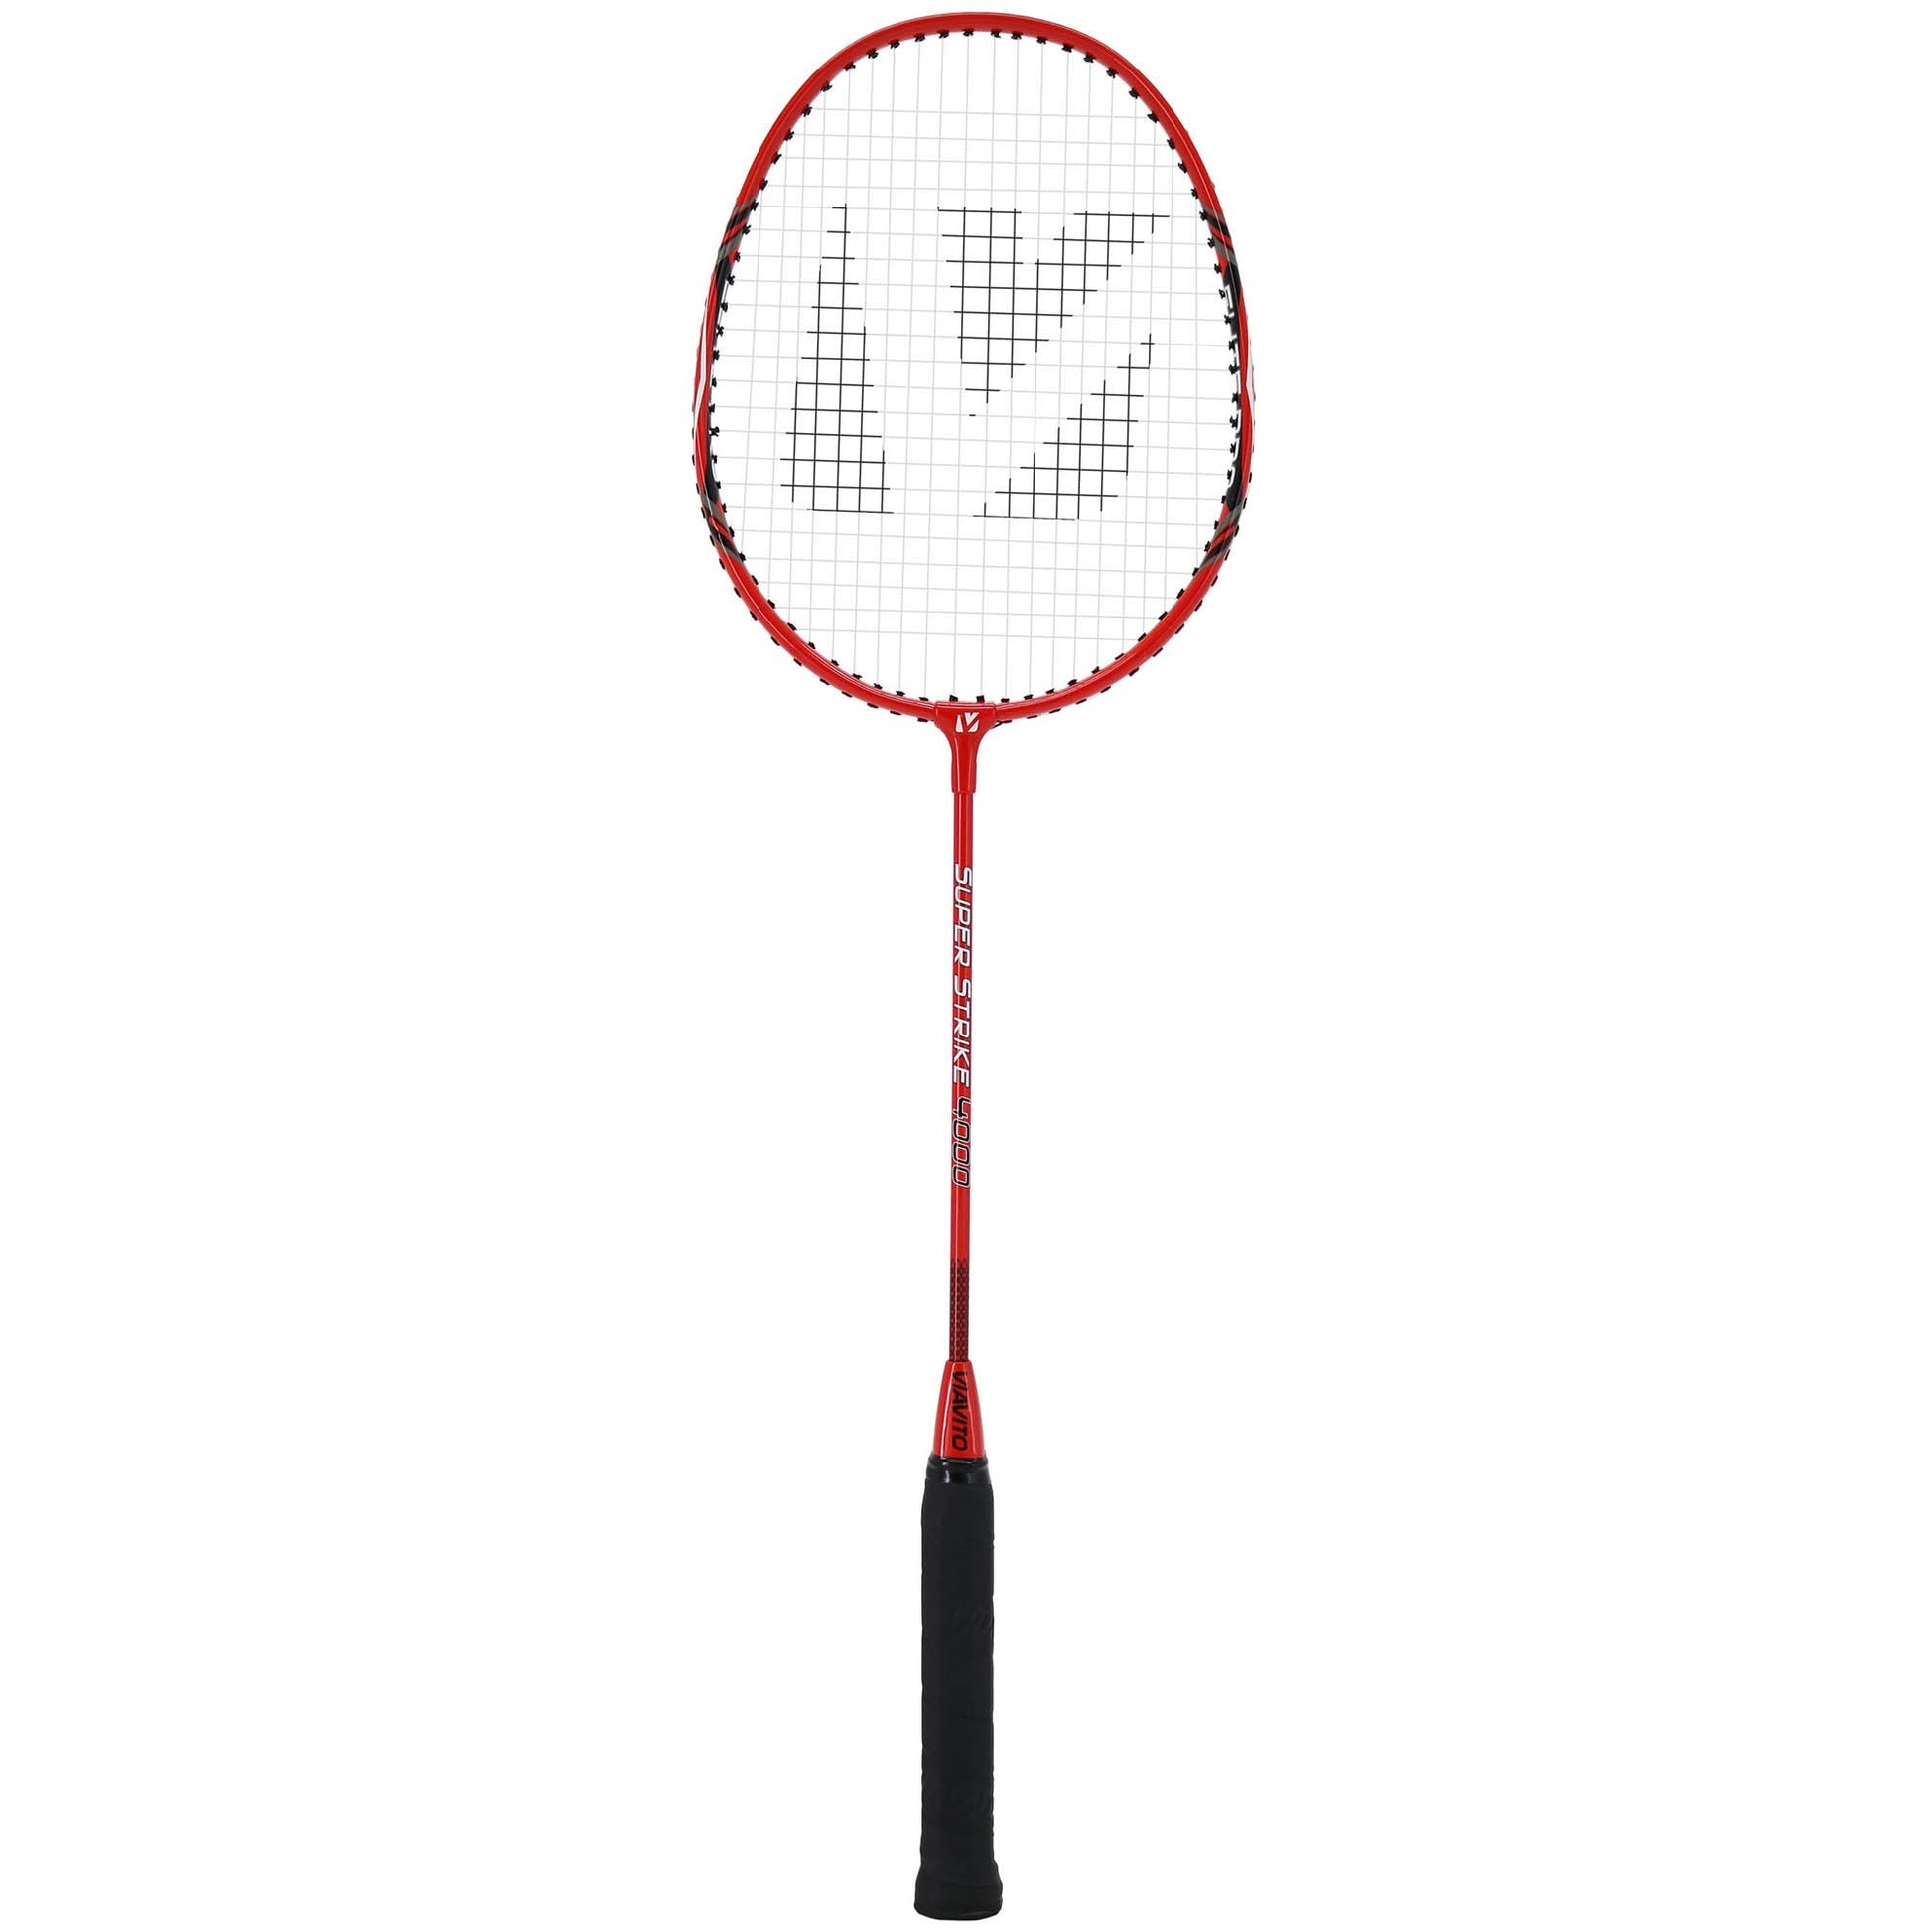 |Viavito Super Strike 4 Player Badminton Set Package Rackets - Back|